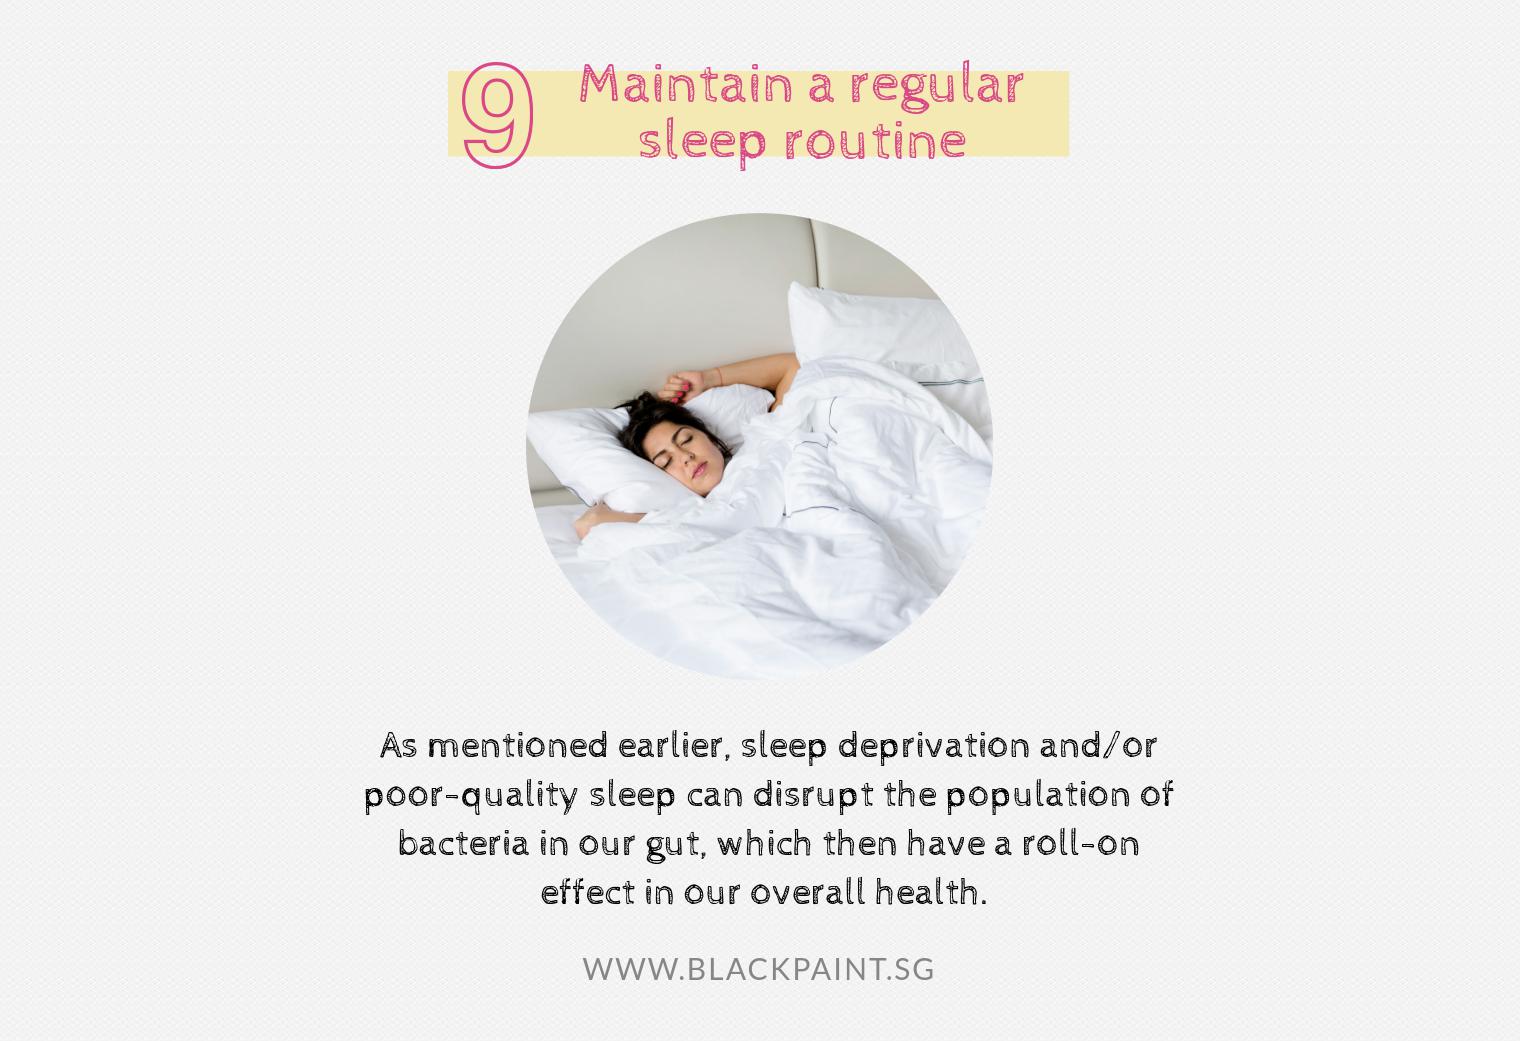 illustration of maintaining a regular sleep routine